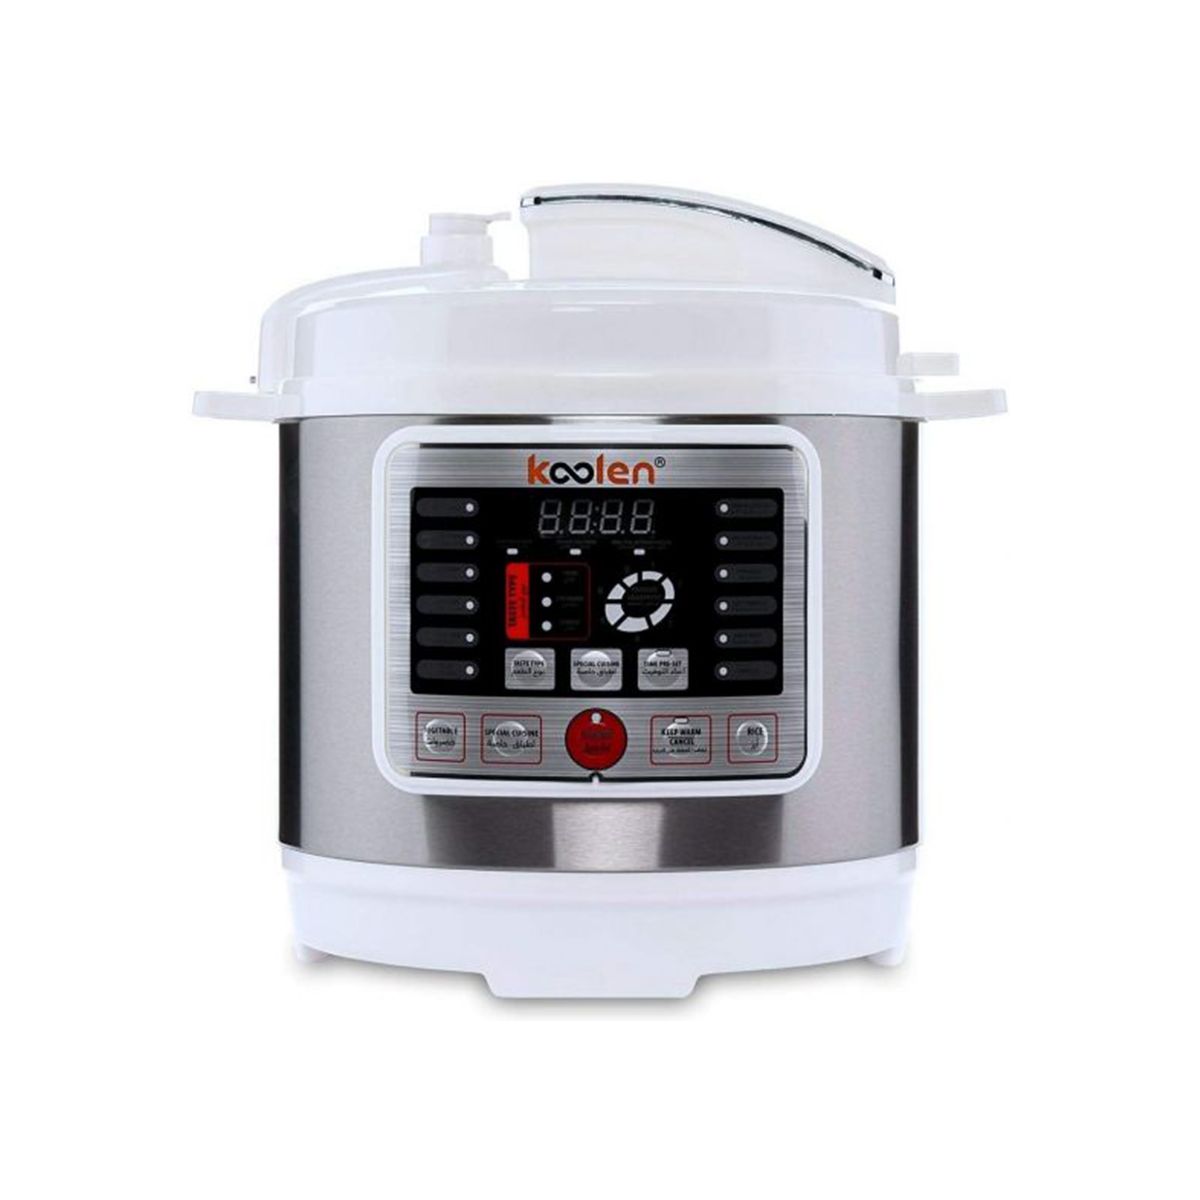 Koolen Pressure Cooker 8 Liter, 1300W-1500W Memory Function, 12 Functions, White/Steel - 816106001